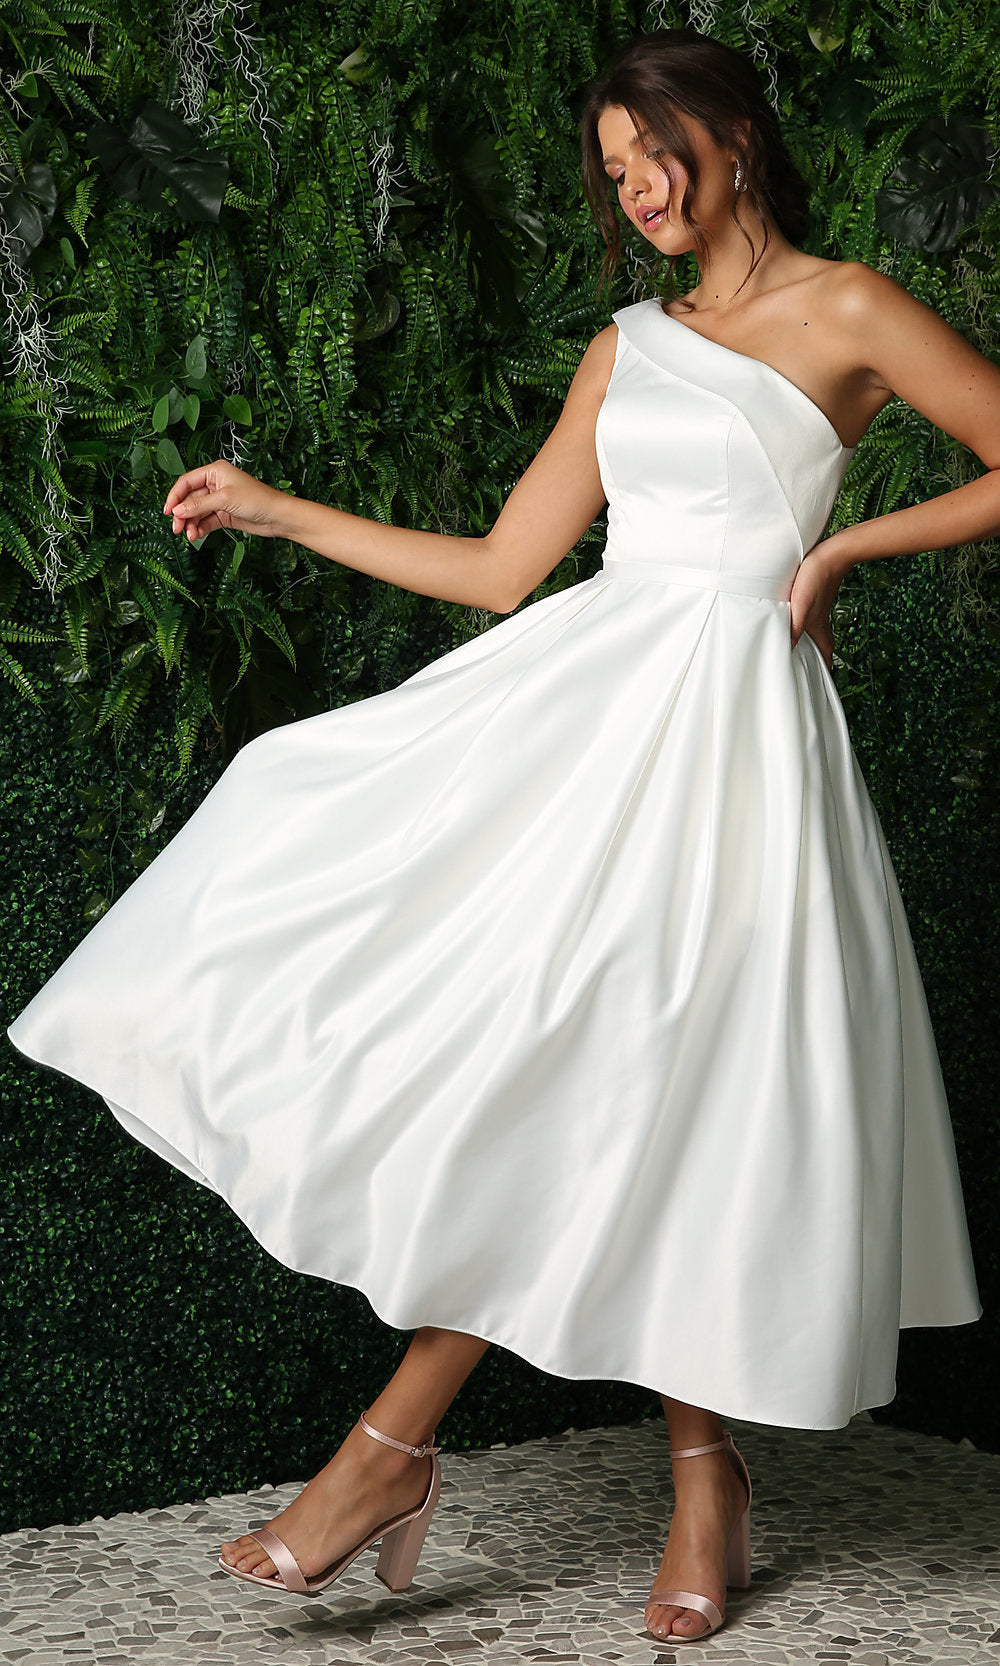 semi formal dresses for wedding